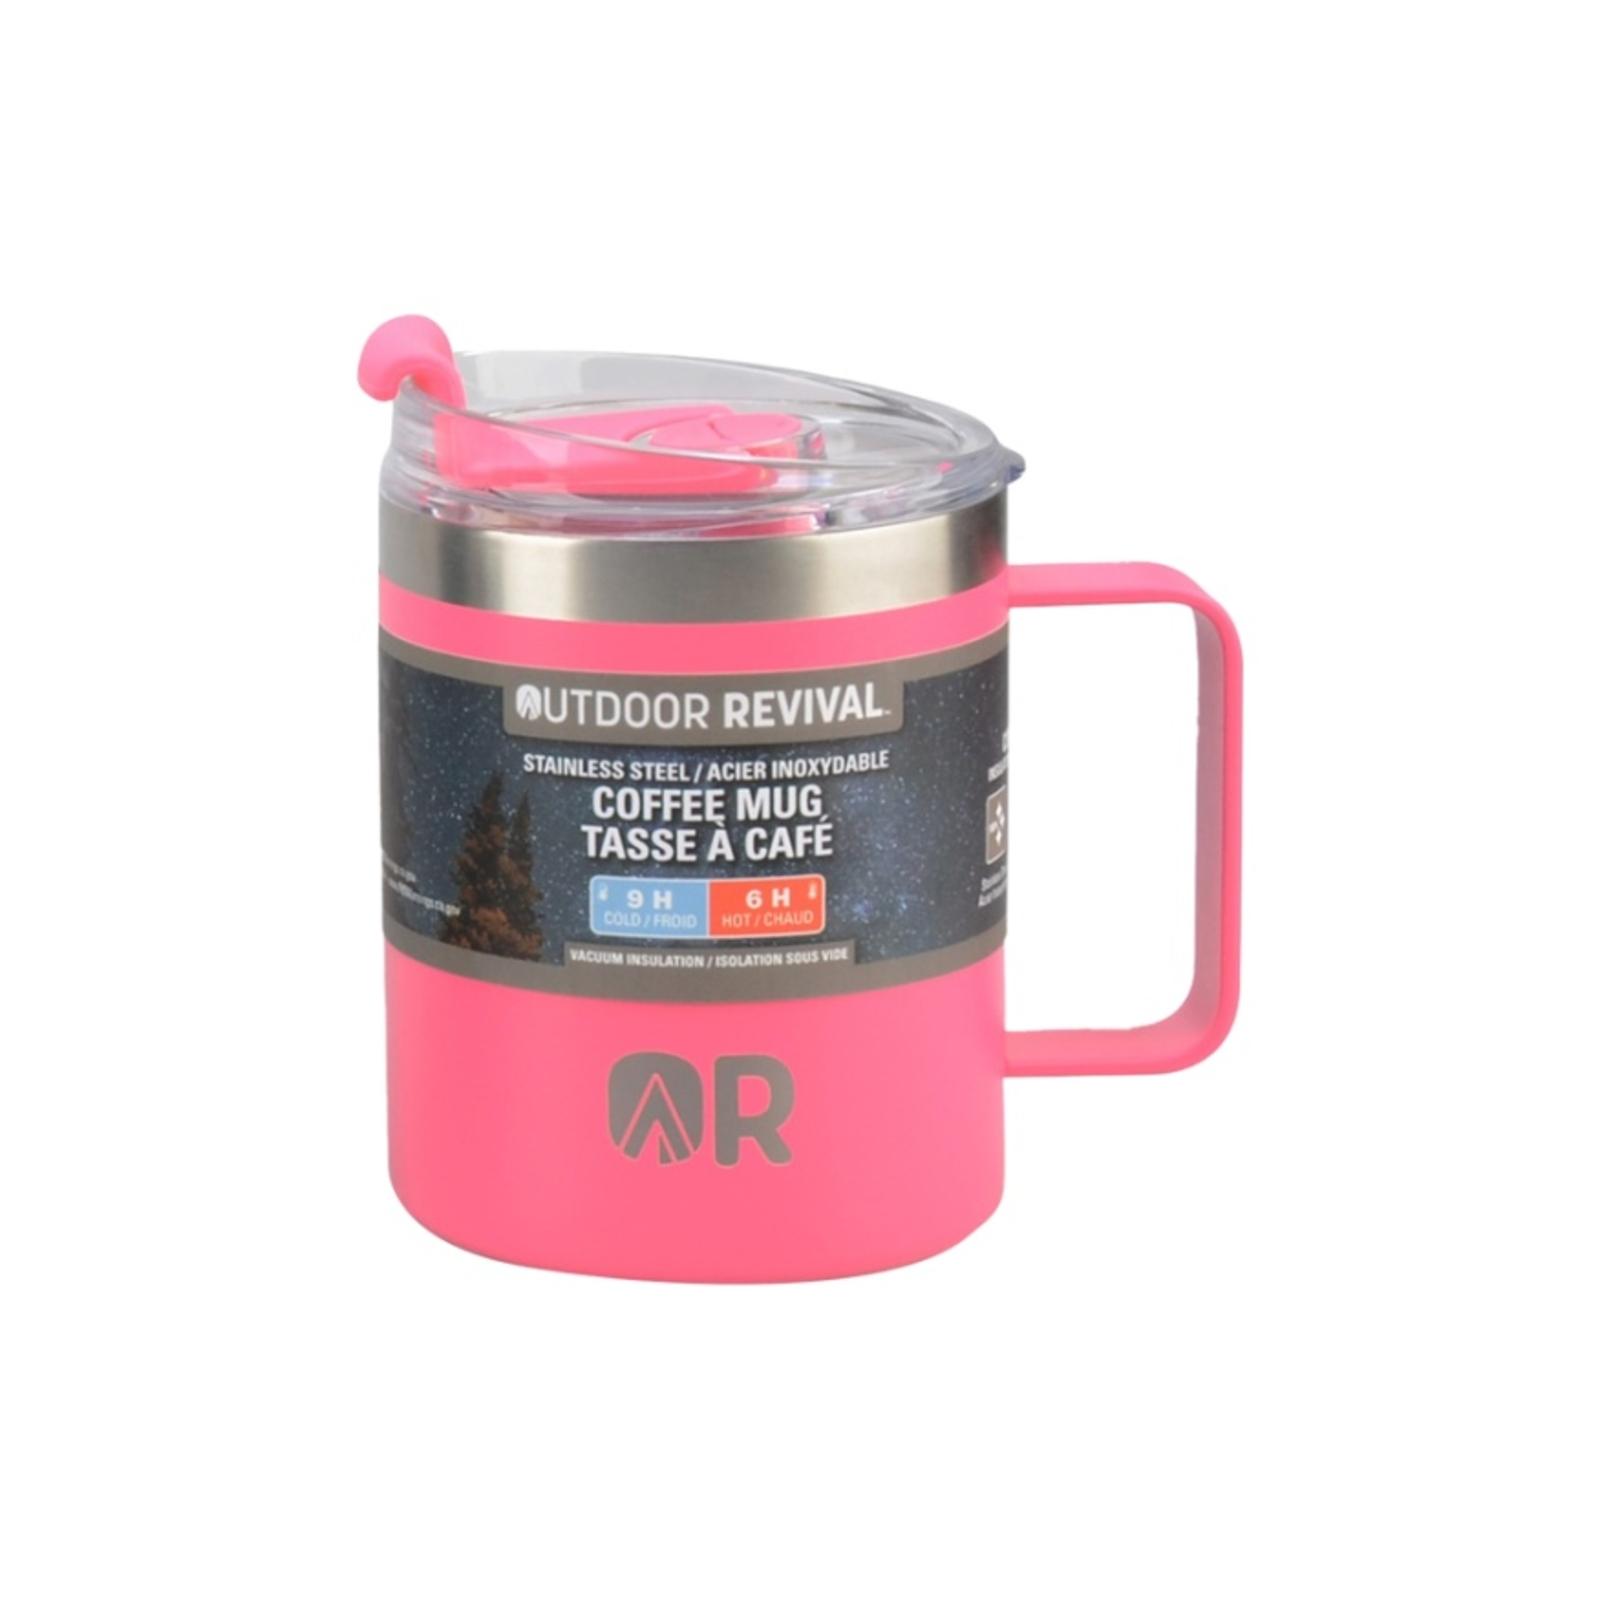 Outdoor Revival 12 OZ Coffee Mug in pink